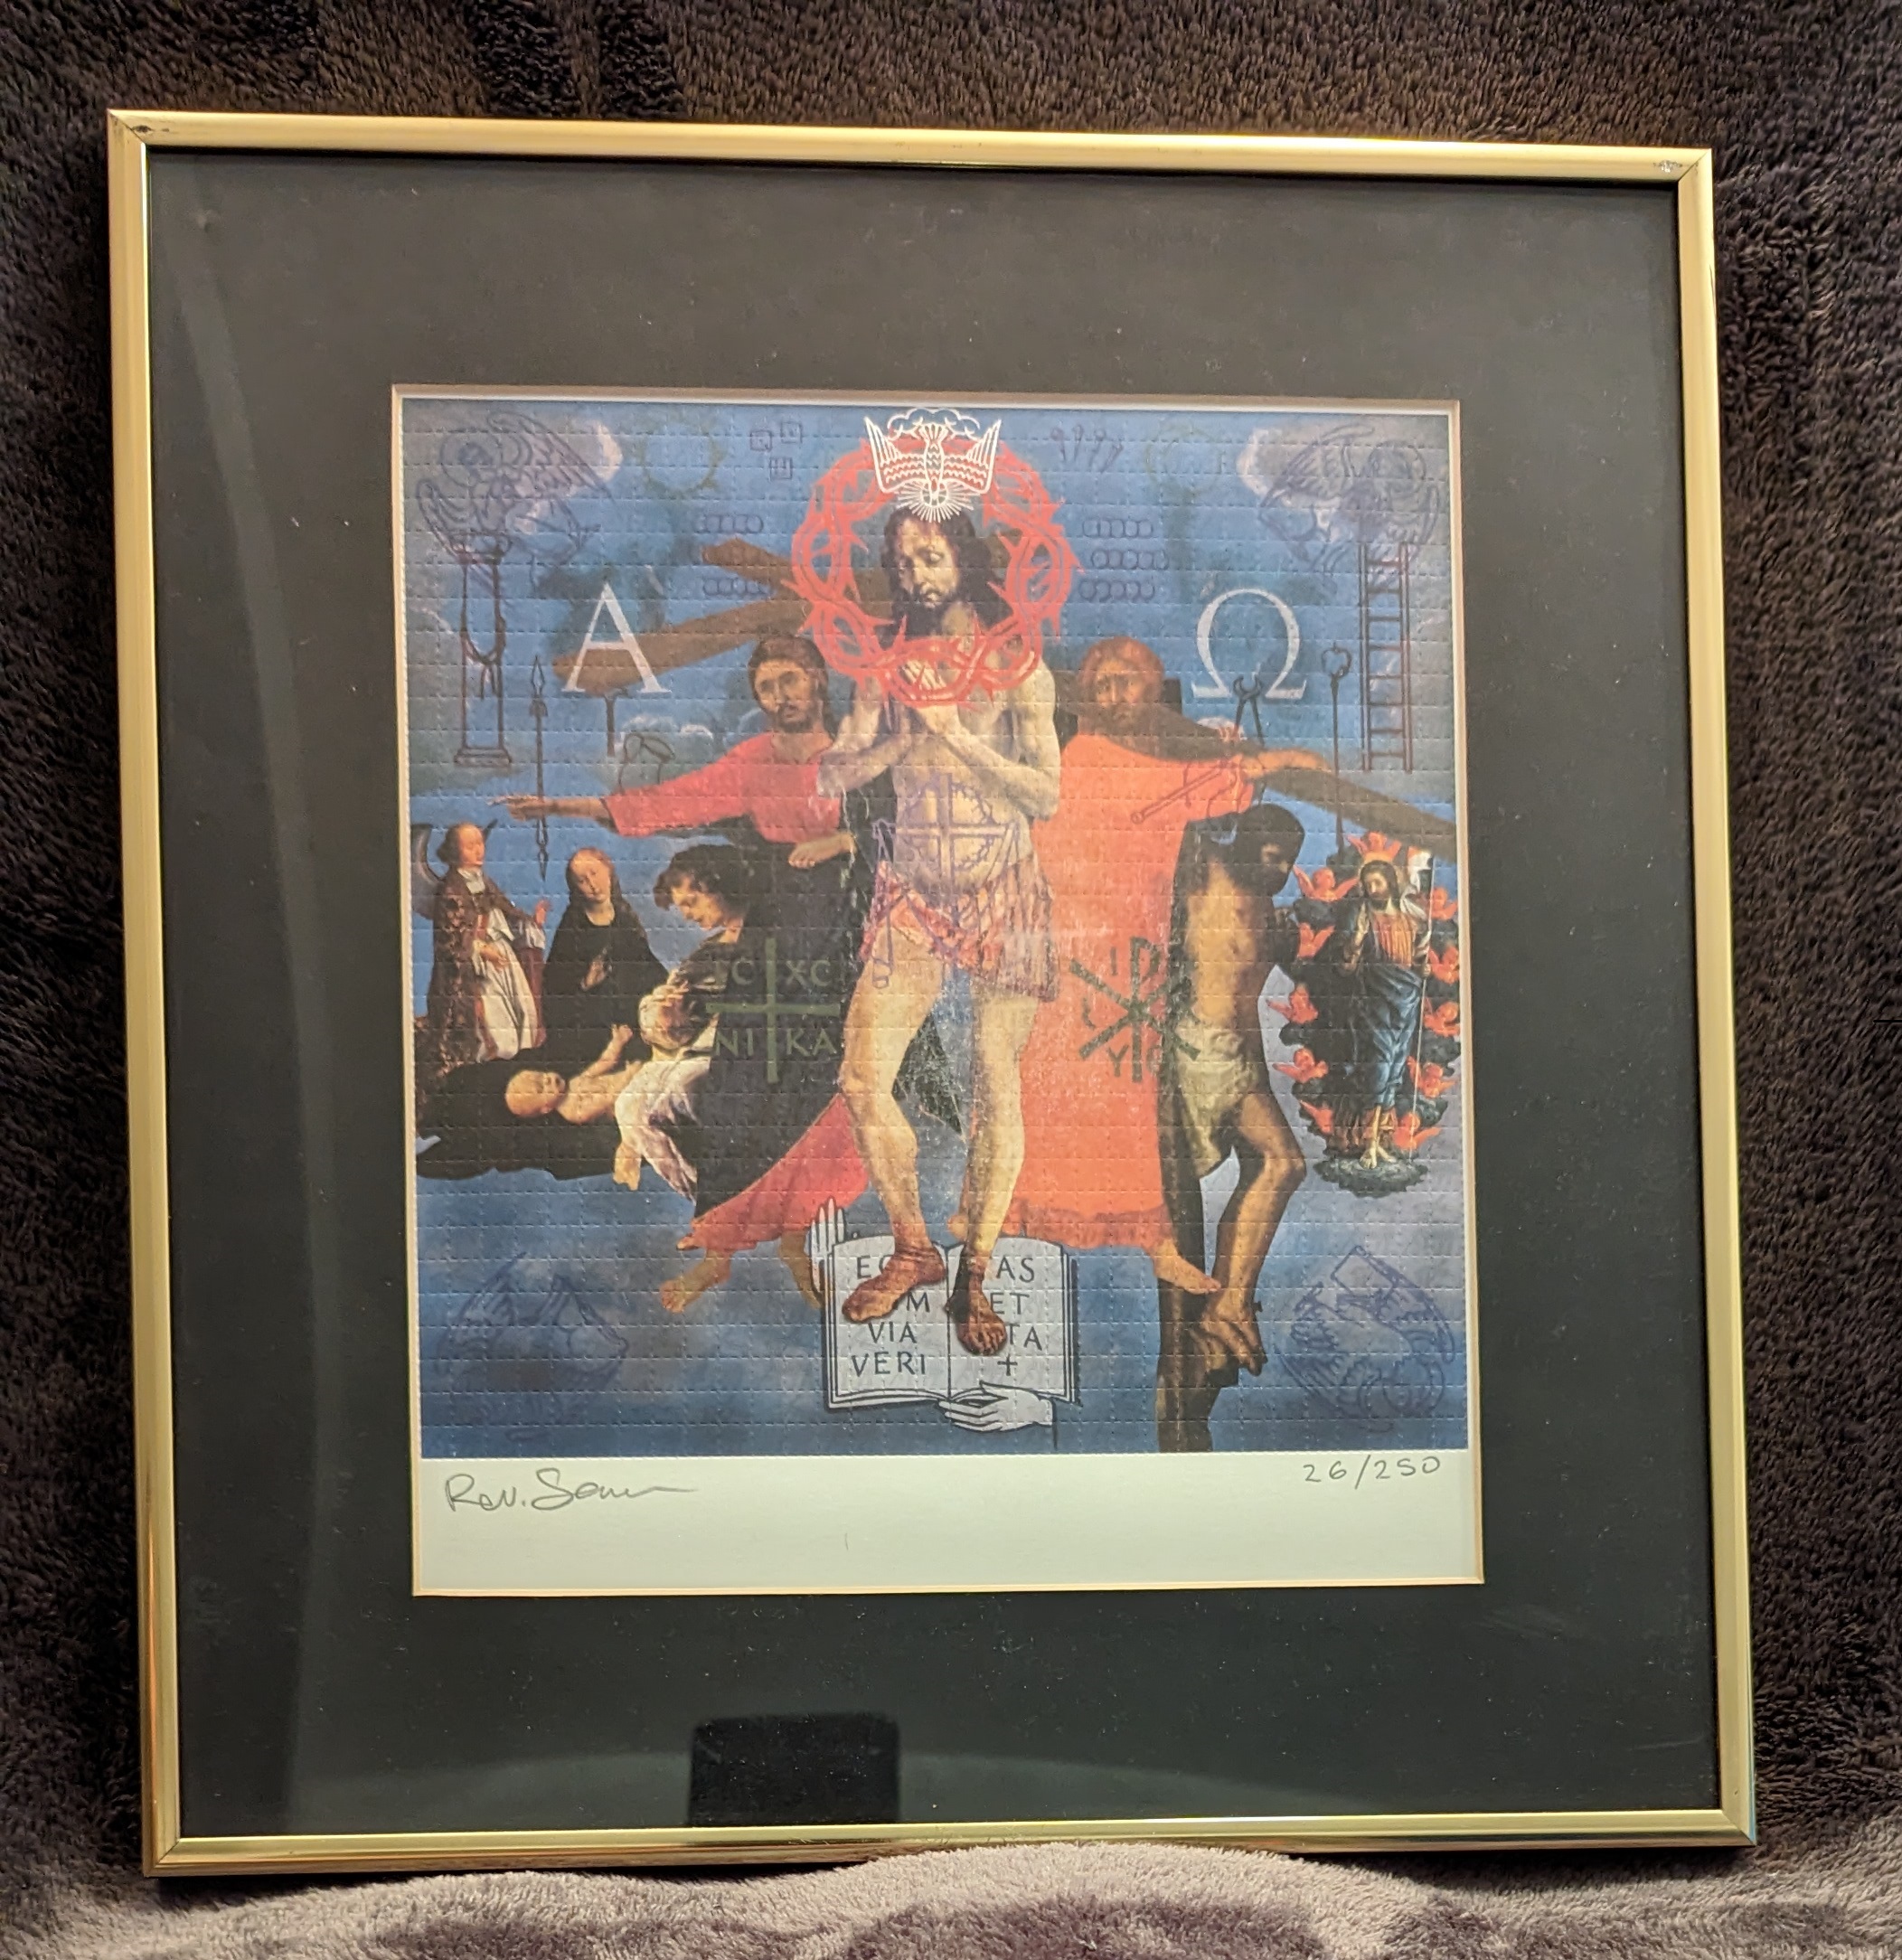 An example of the LSD Blotter art print Jesus, Signed and Framed